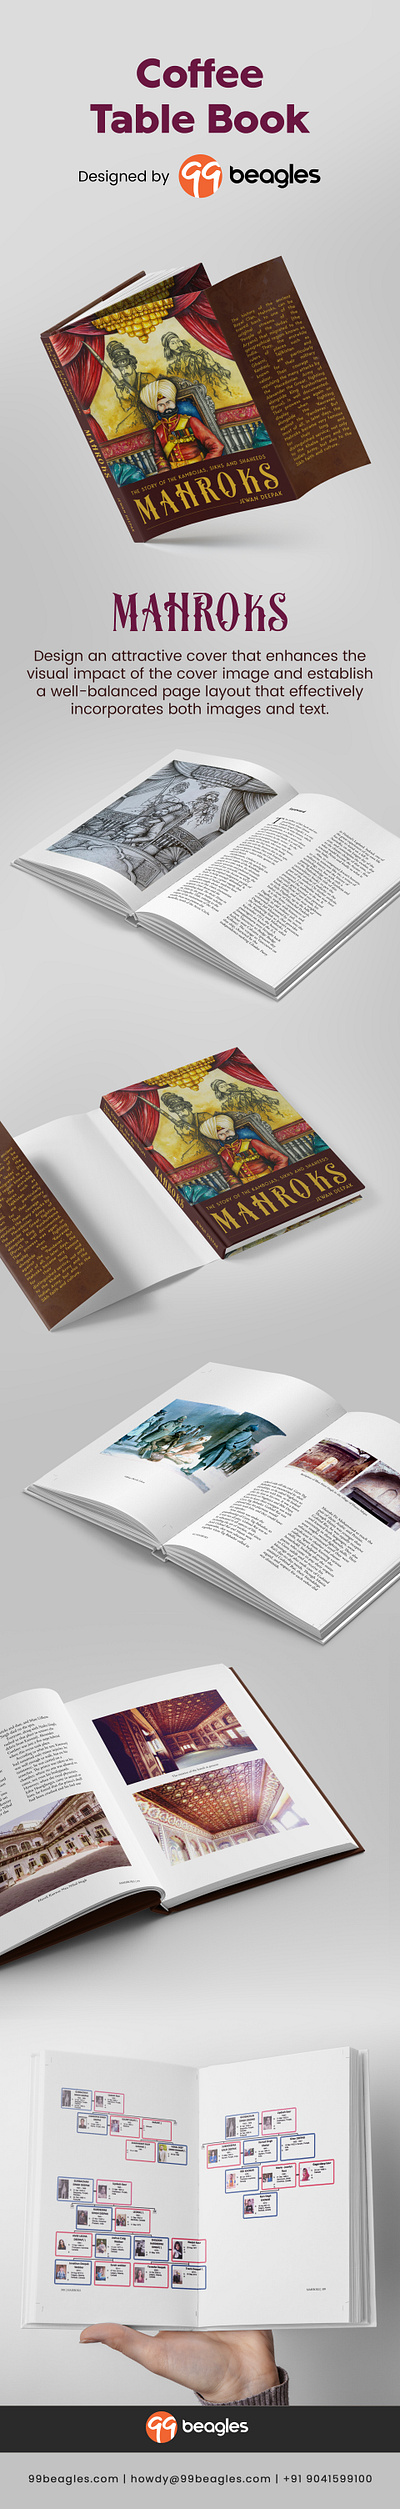 MAHROKS | Coffee Table Book Designed by 99beagles book covers books branding cover design design editorial design illustration layout publishing